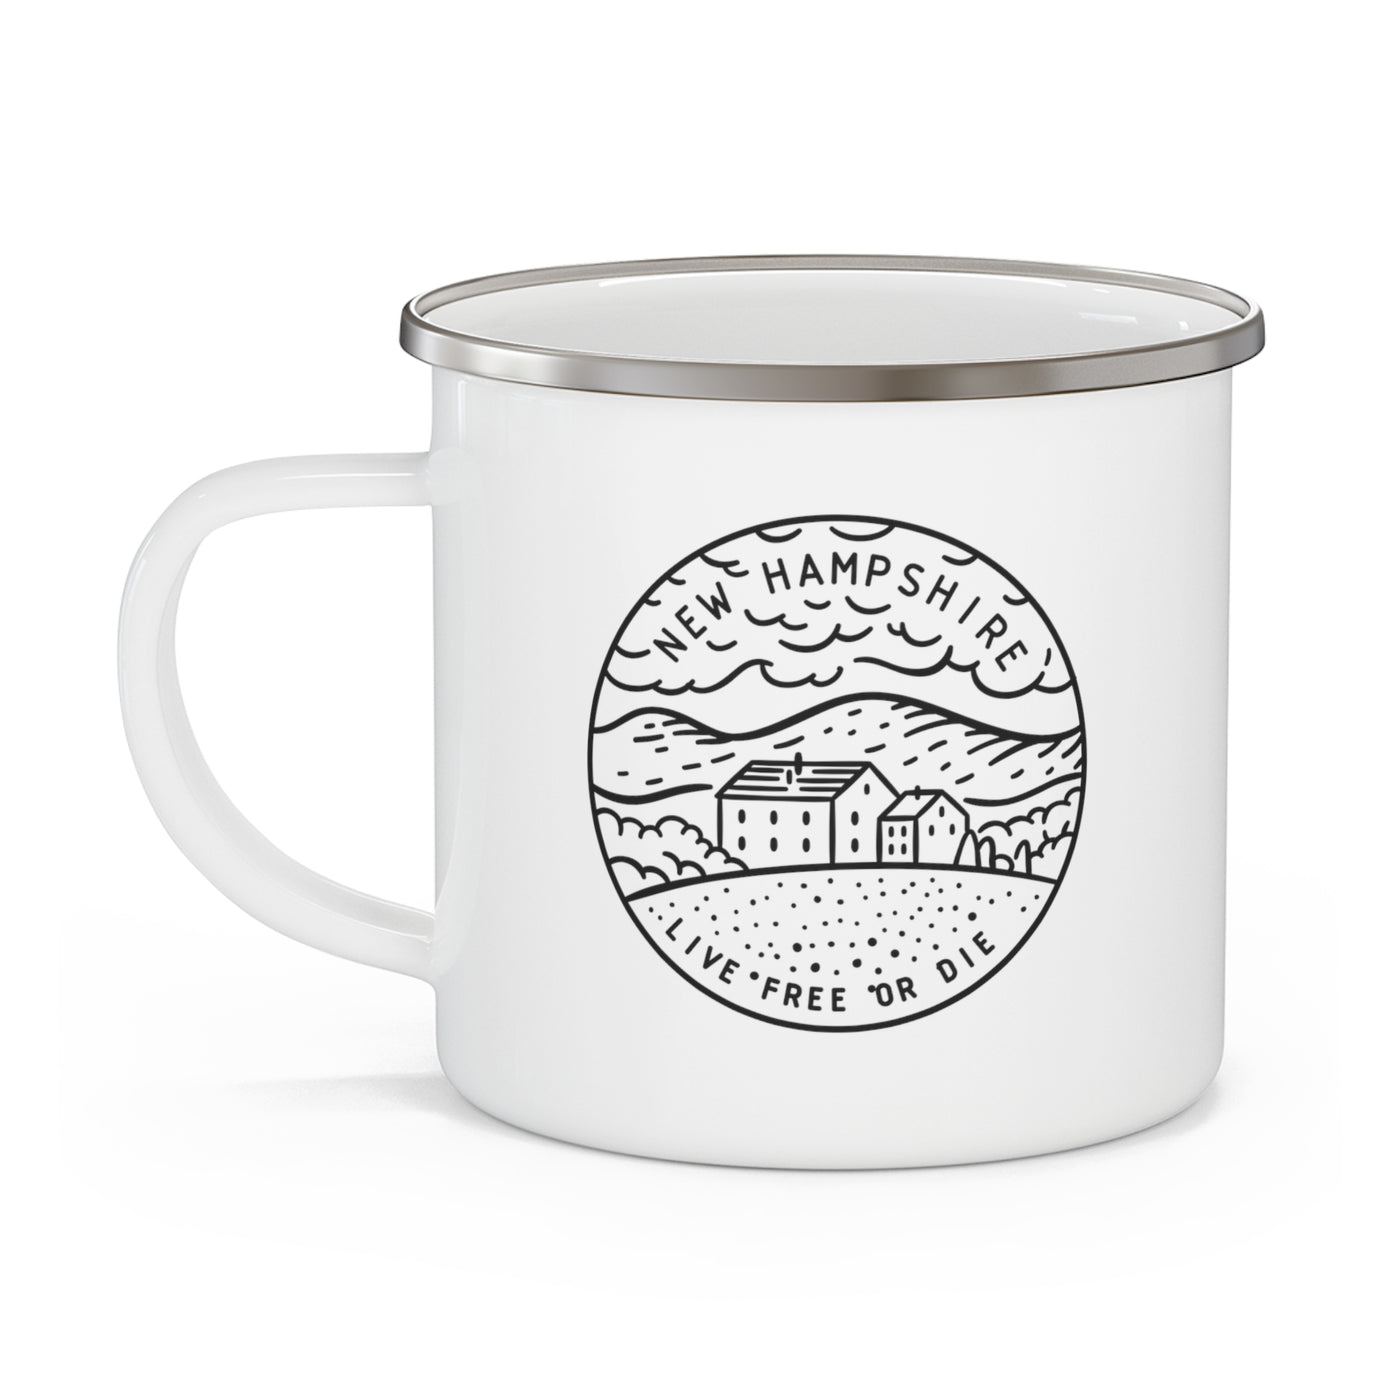 New Hampshire State Motto Enamel Camping Mug